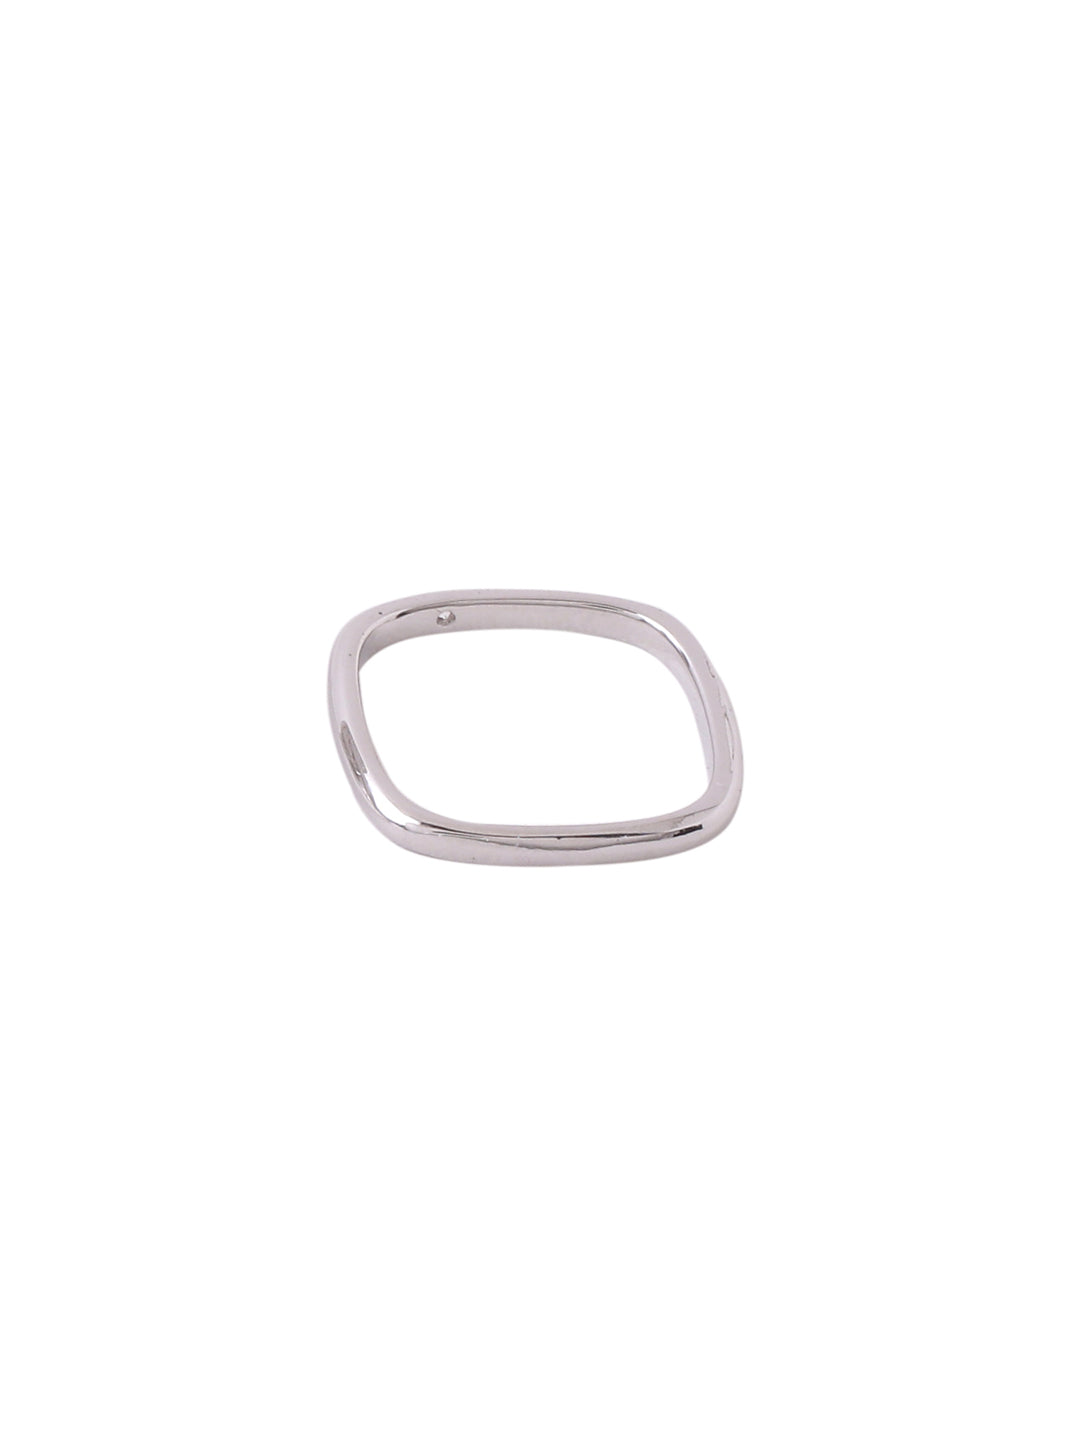 Women's Silver-Plated rectangular Stylish Ring - NVR